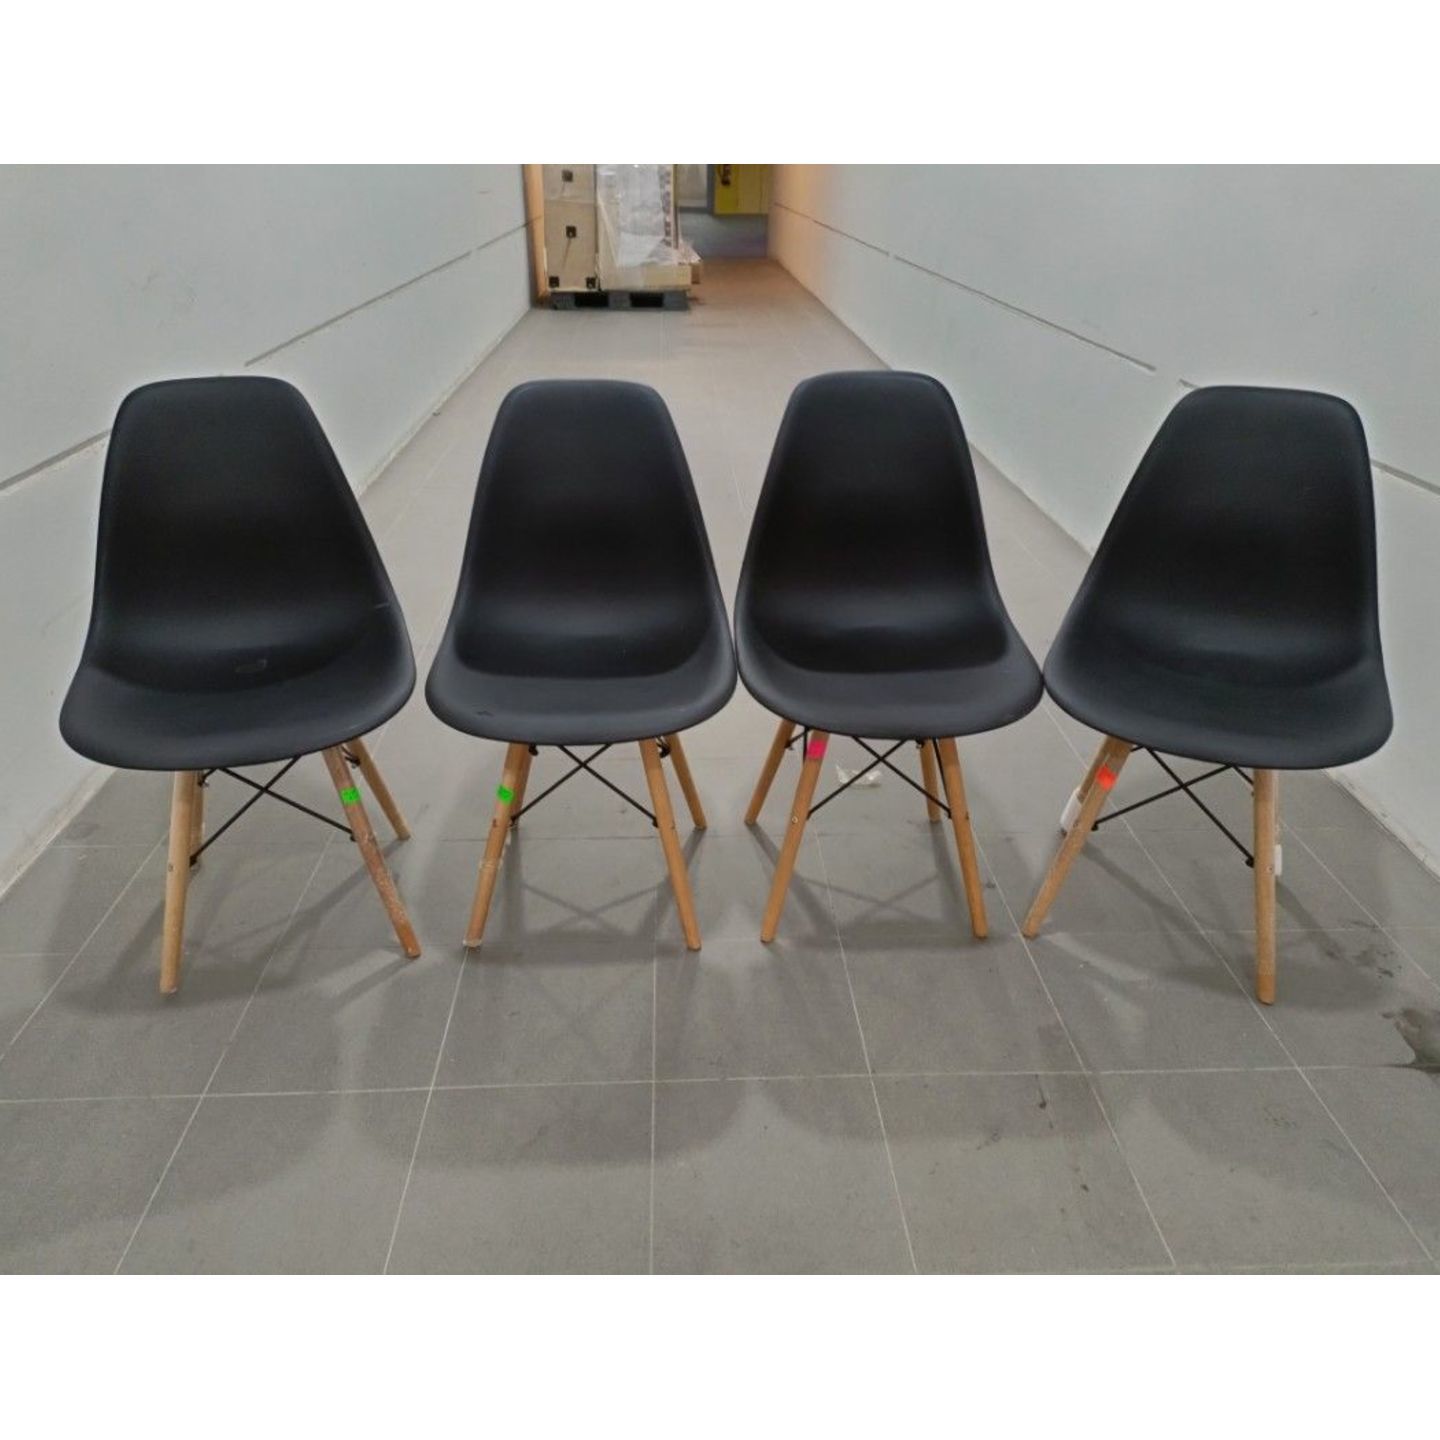 4 x RAZ Eames Designer Chairs in BLACK